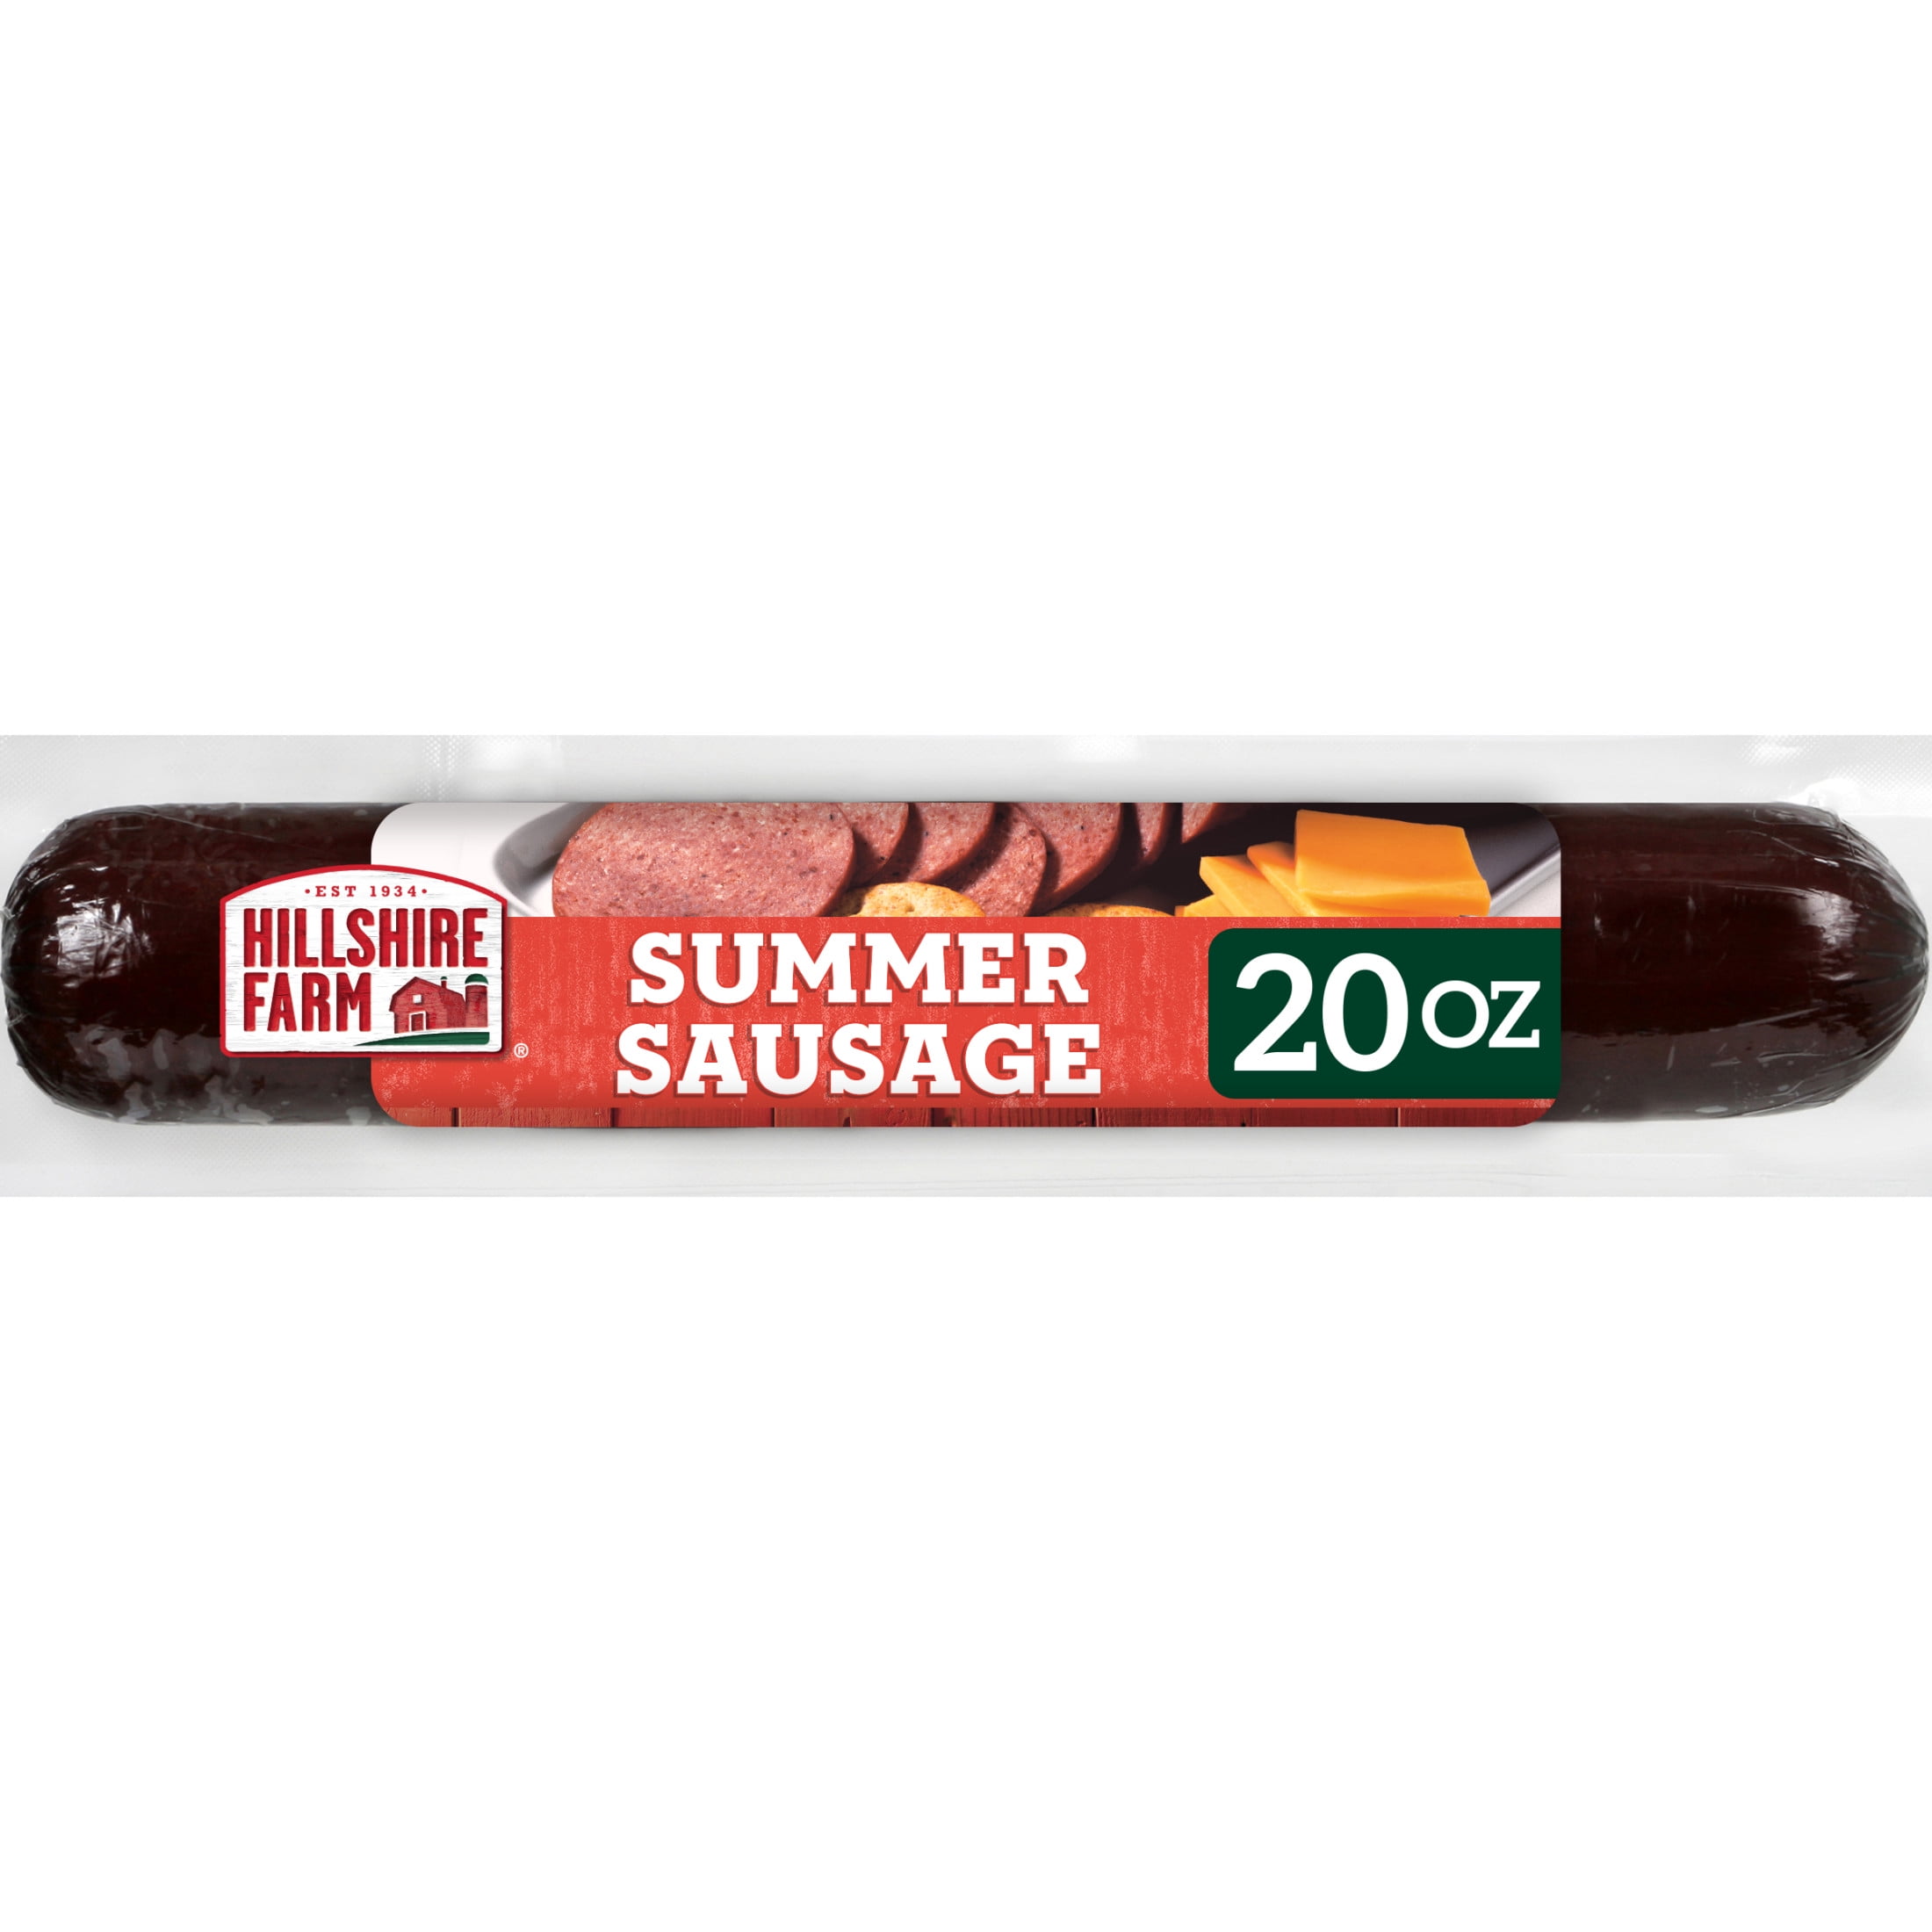 Hillshire Farm Hardwood Smoked Summer Sausage, 20 oz 